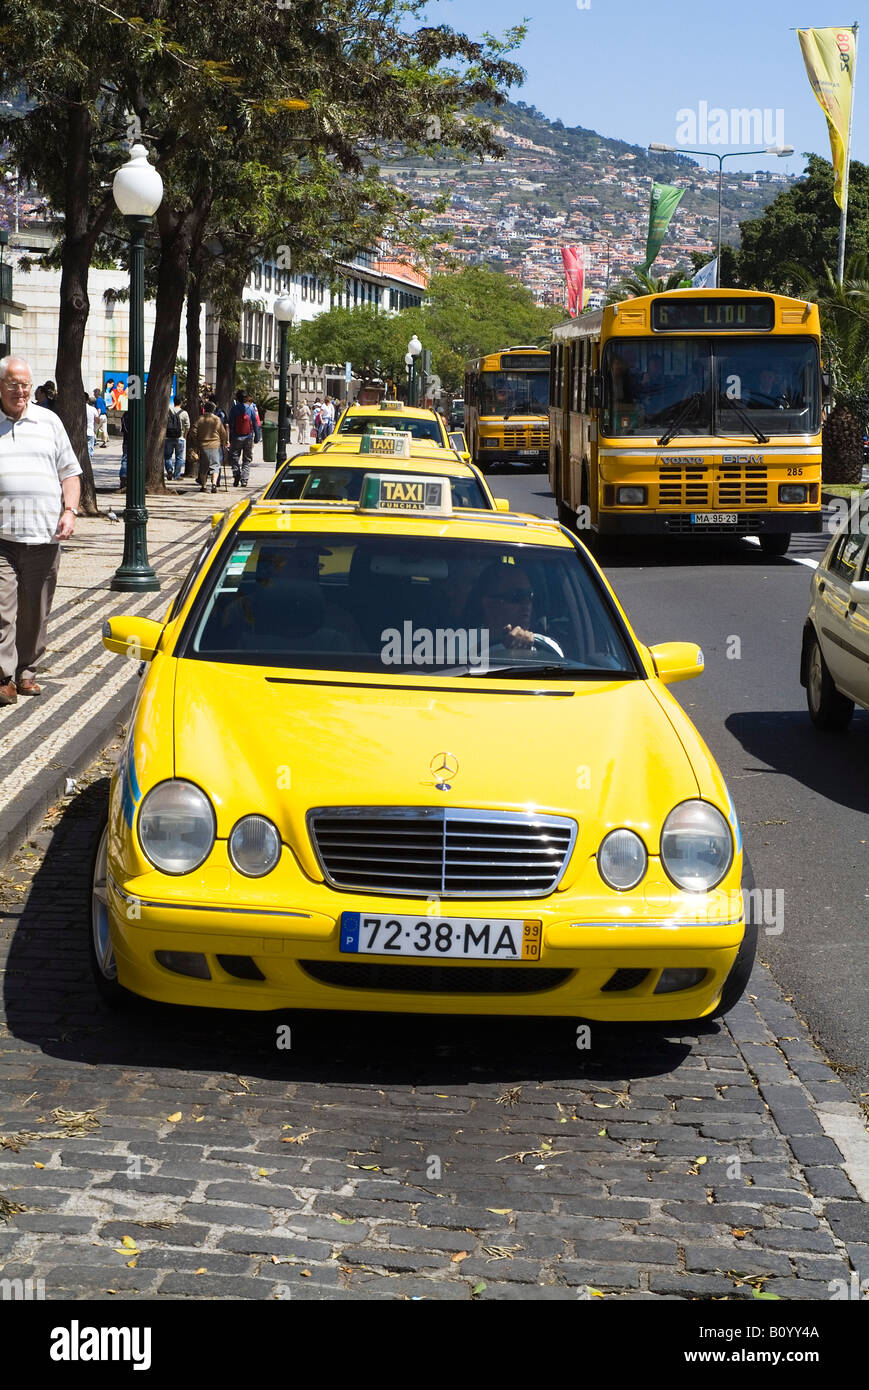 taxi dh Taxirank FUNCHAL MADEIRA Queuing Yellow taxi e autobus Funchals City Commuter taxi fila rank Foto Stock